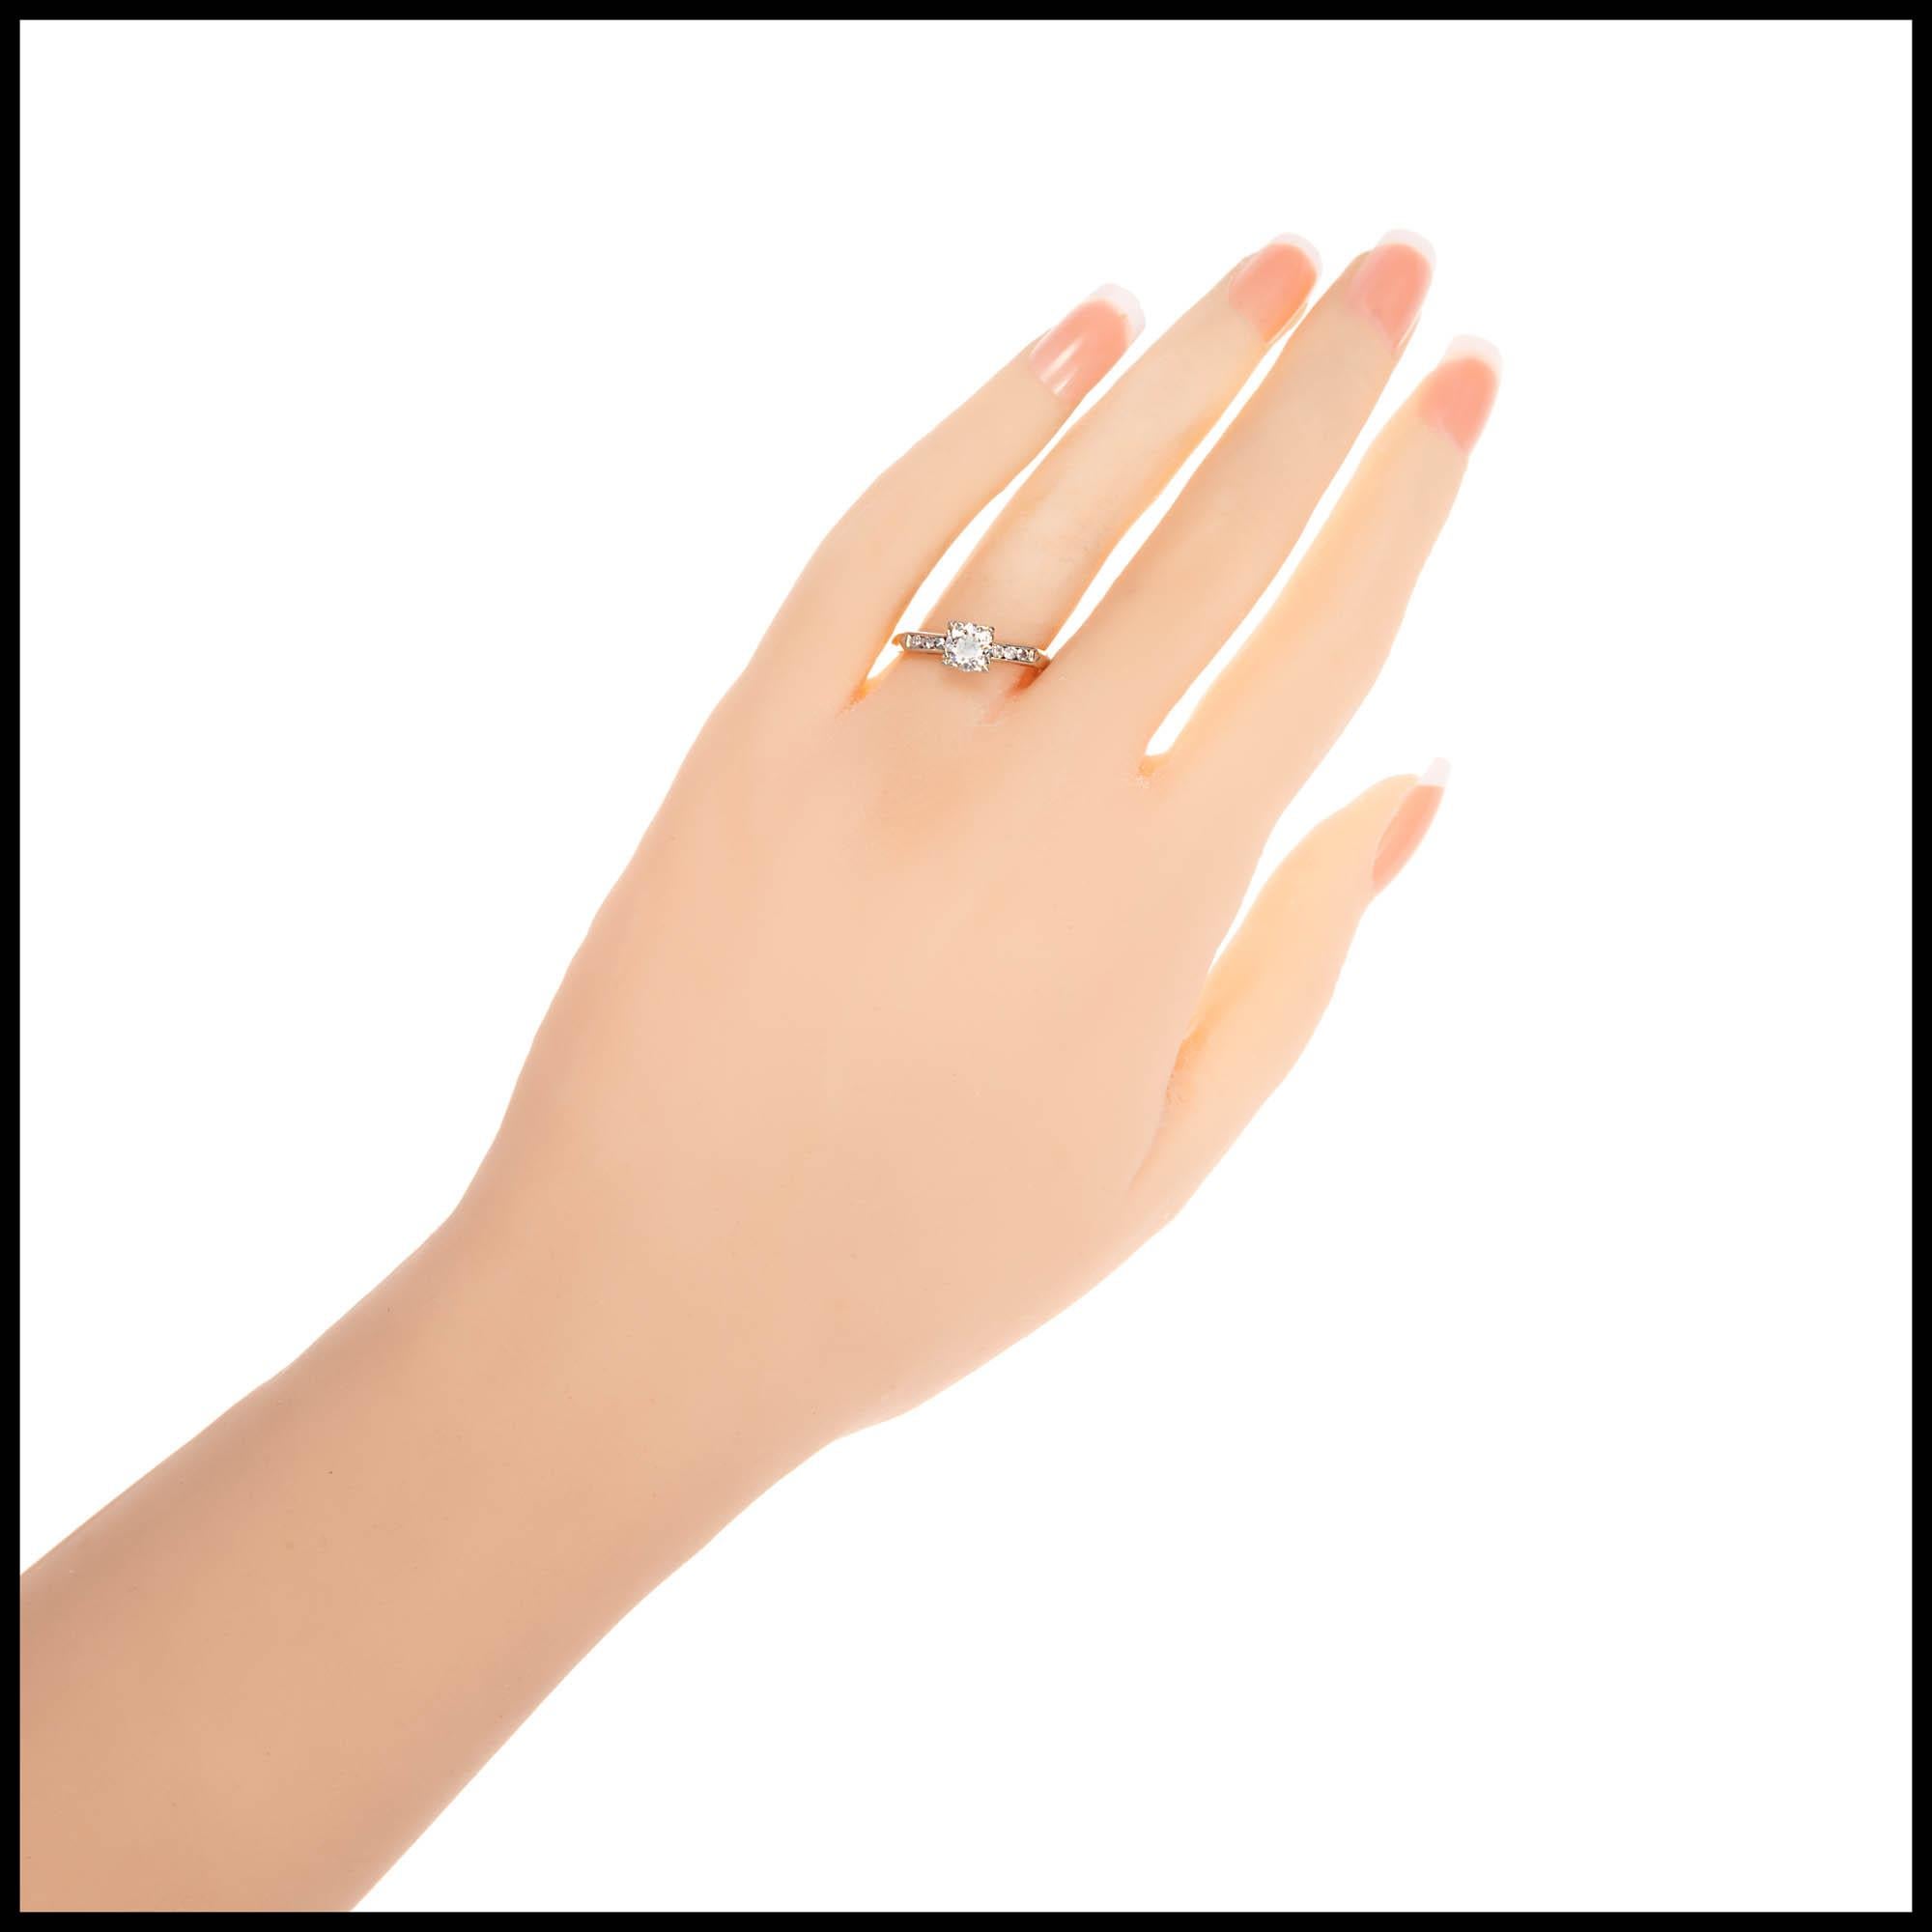 55 carat diamond ring